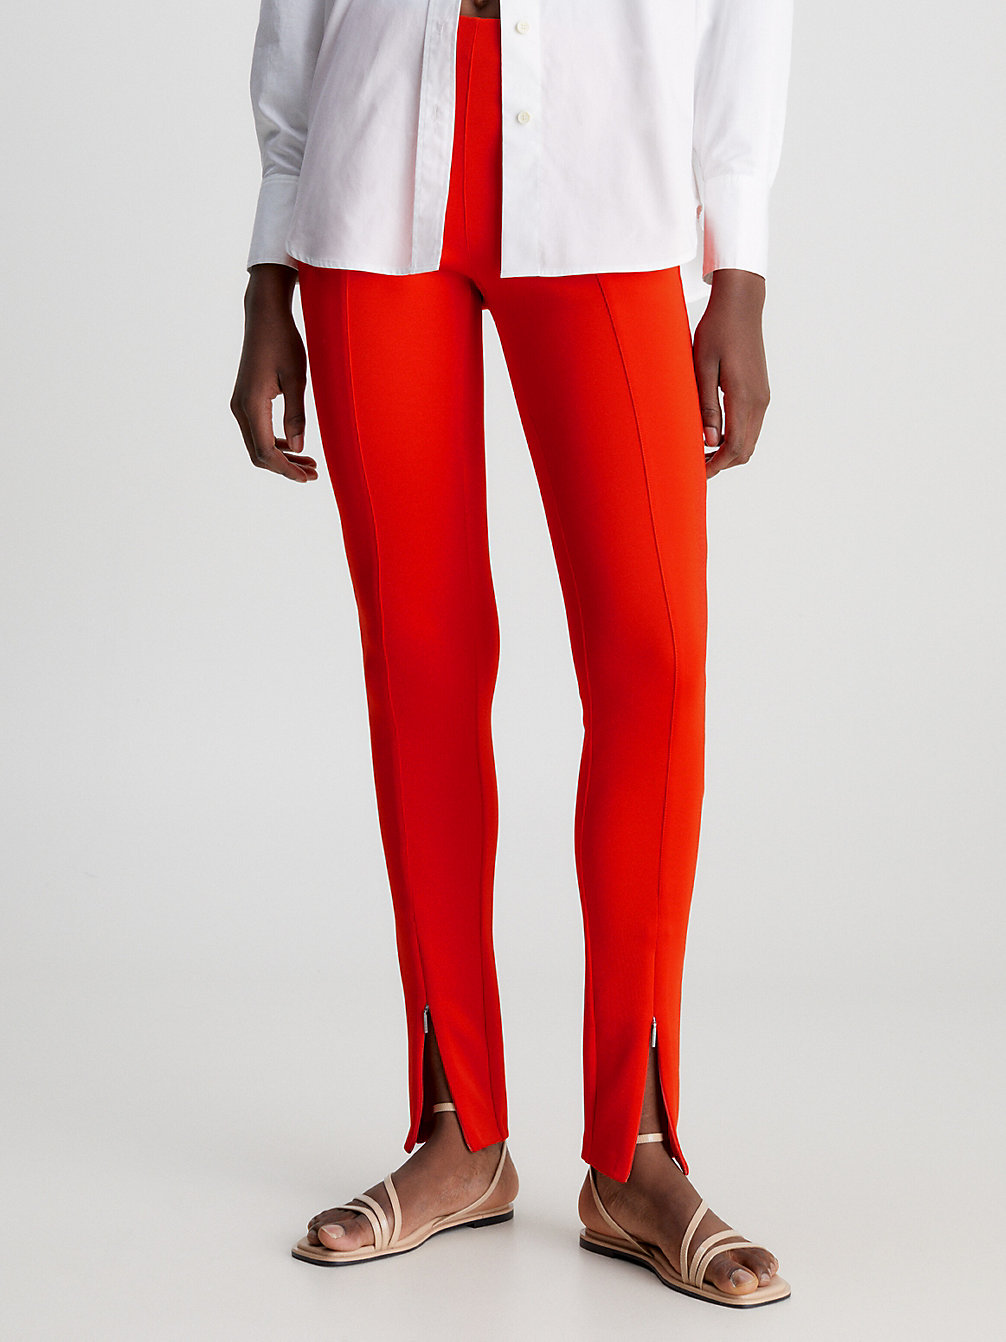 POINCIANA Skinny Technical Knit Leggings undefined women Calvin Klein